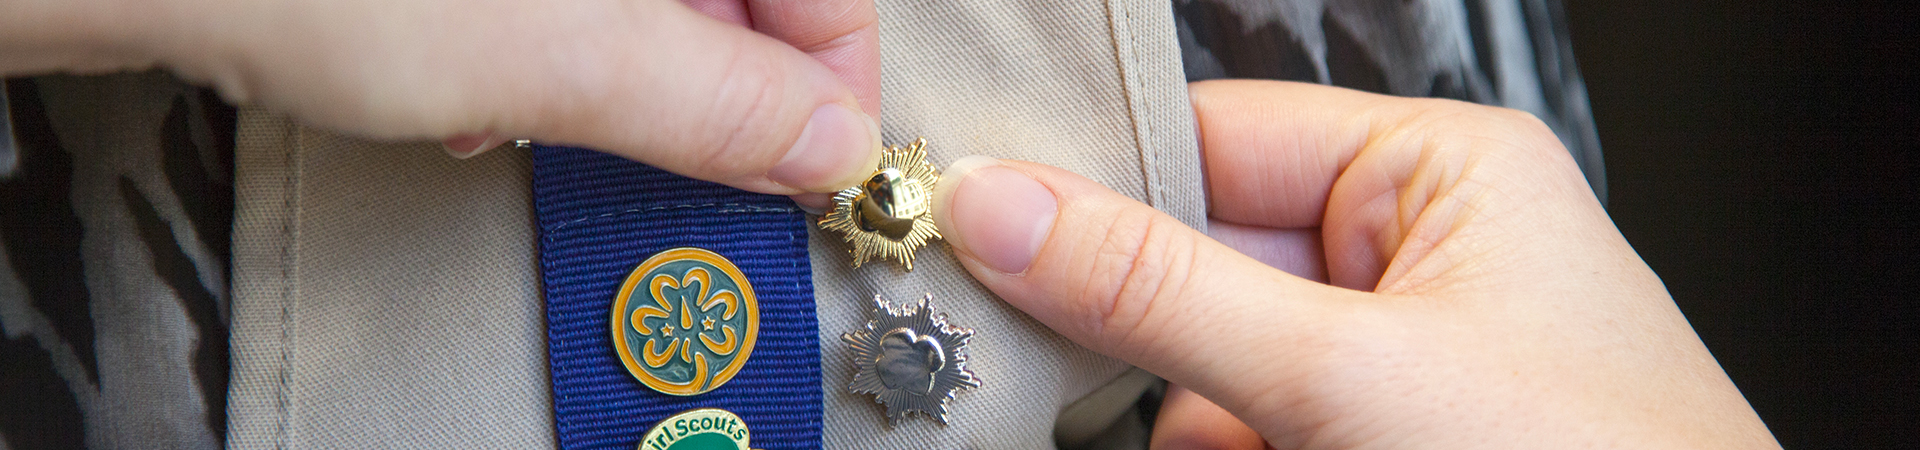  Gold award pin on ambassador uniform vest. 